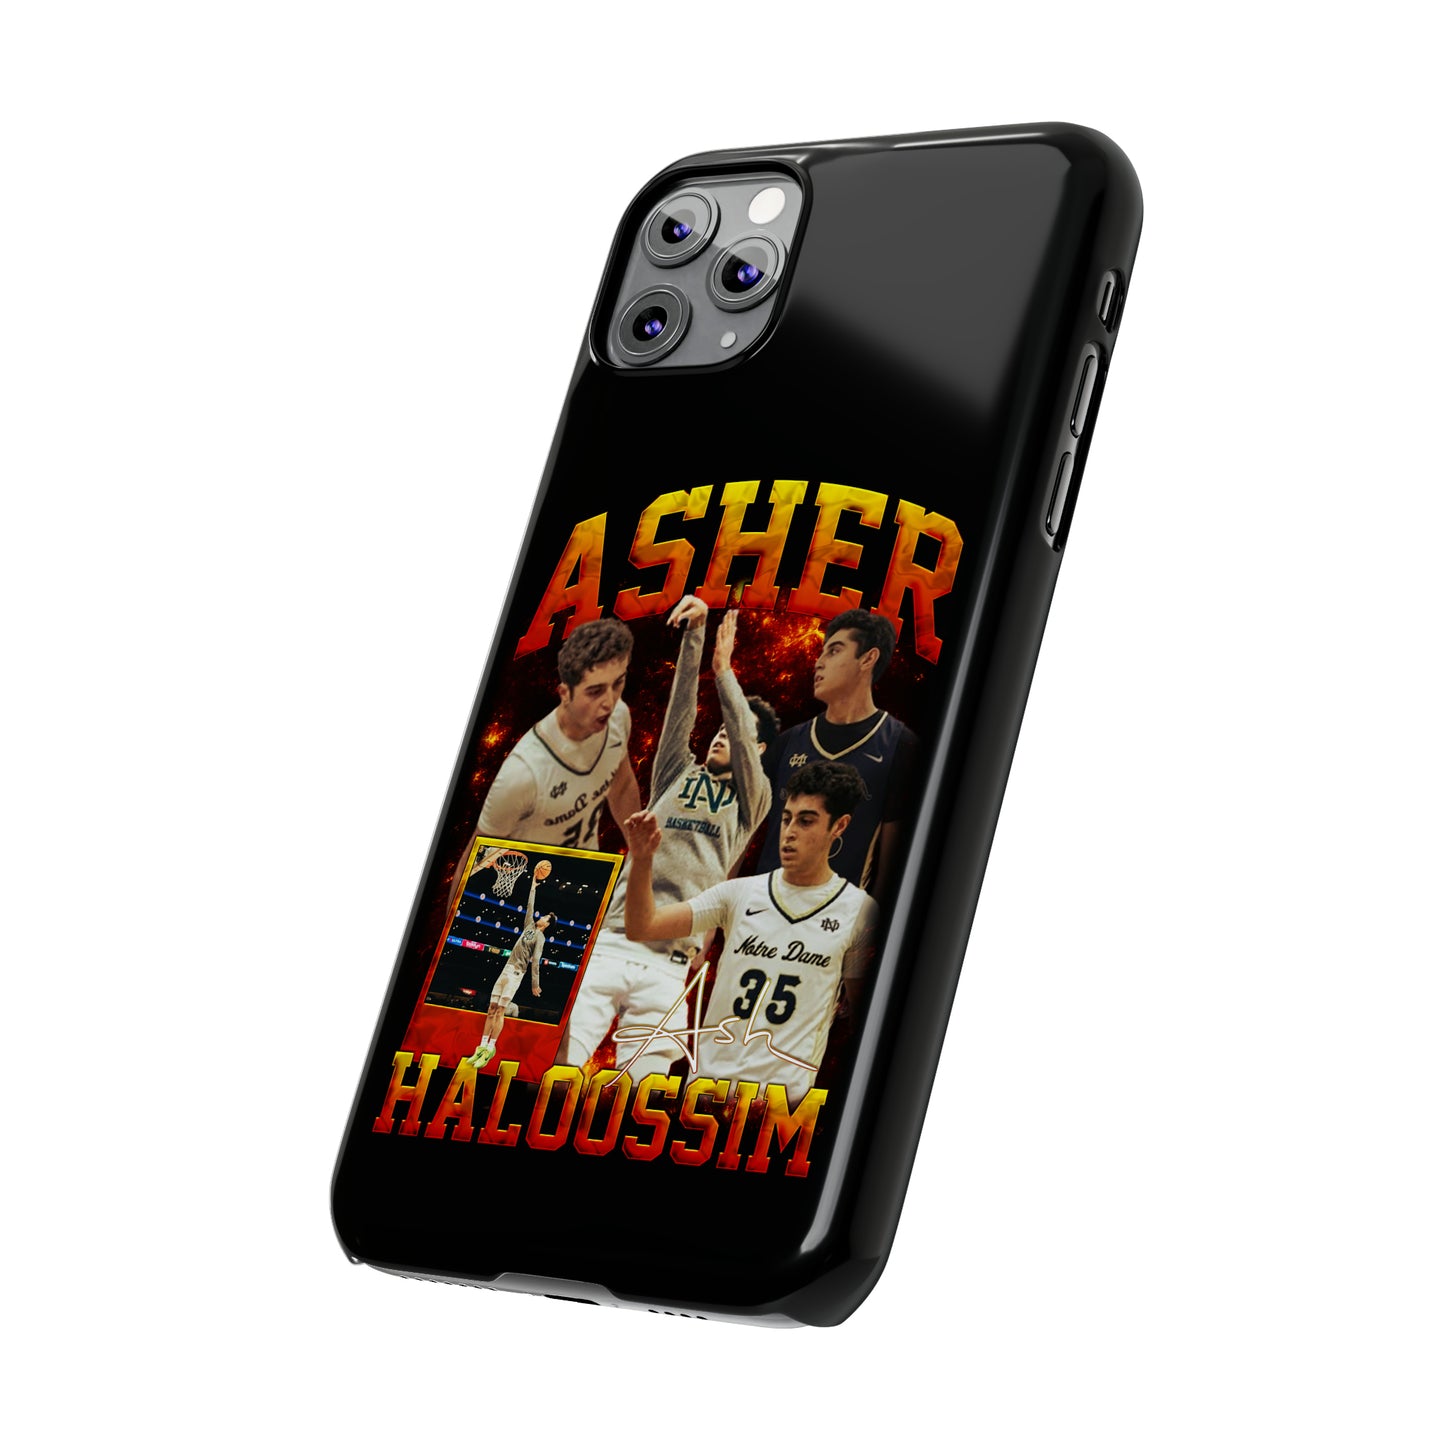 Asher Haloossim Slim Phone Cases